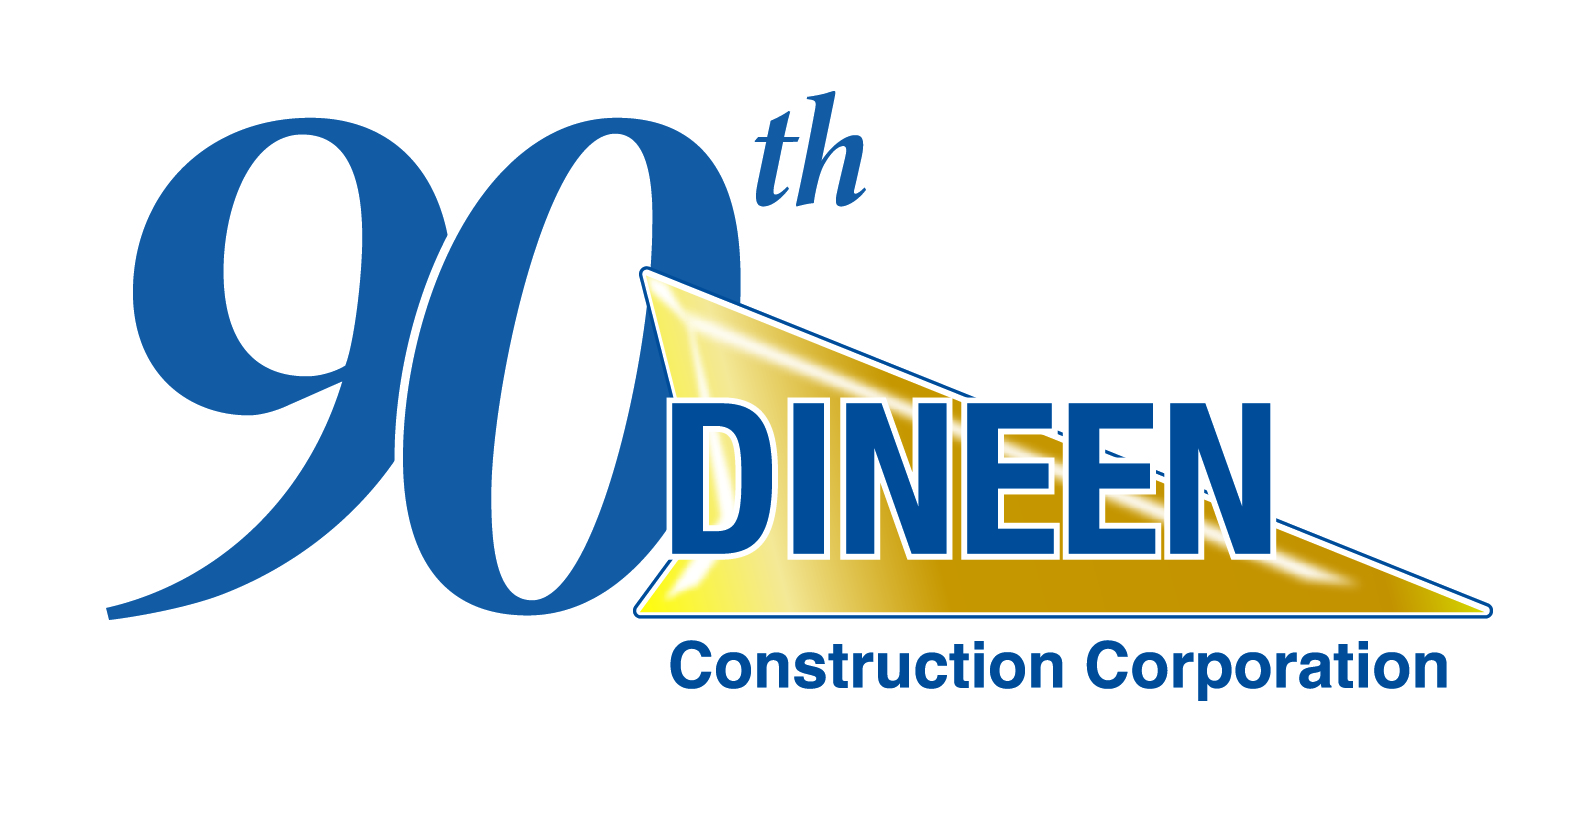 90th Dineen Construction Corporation logo